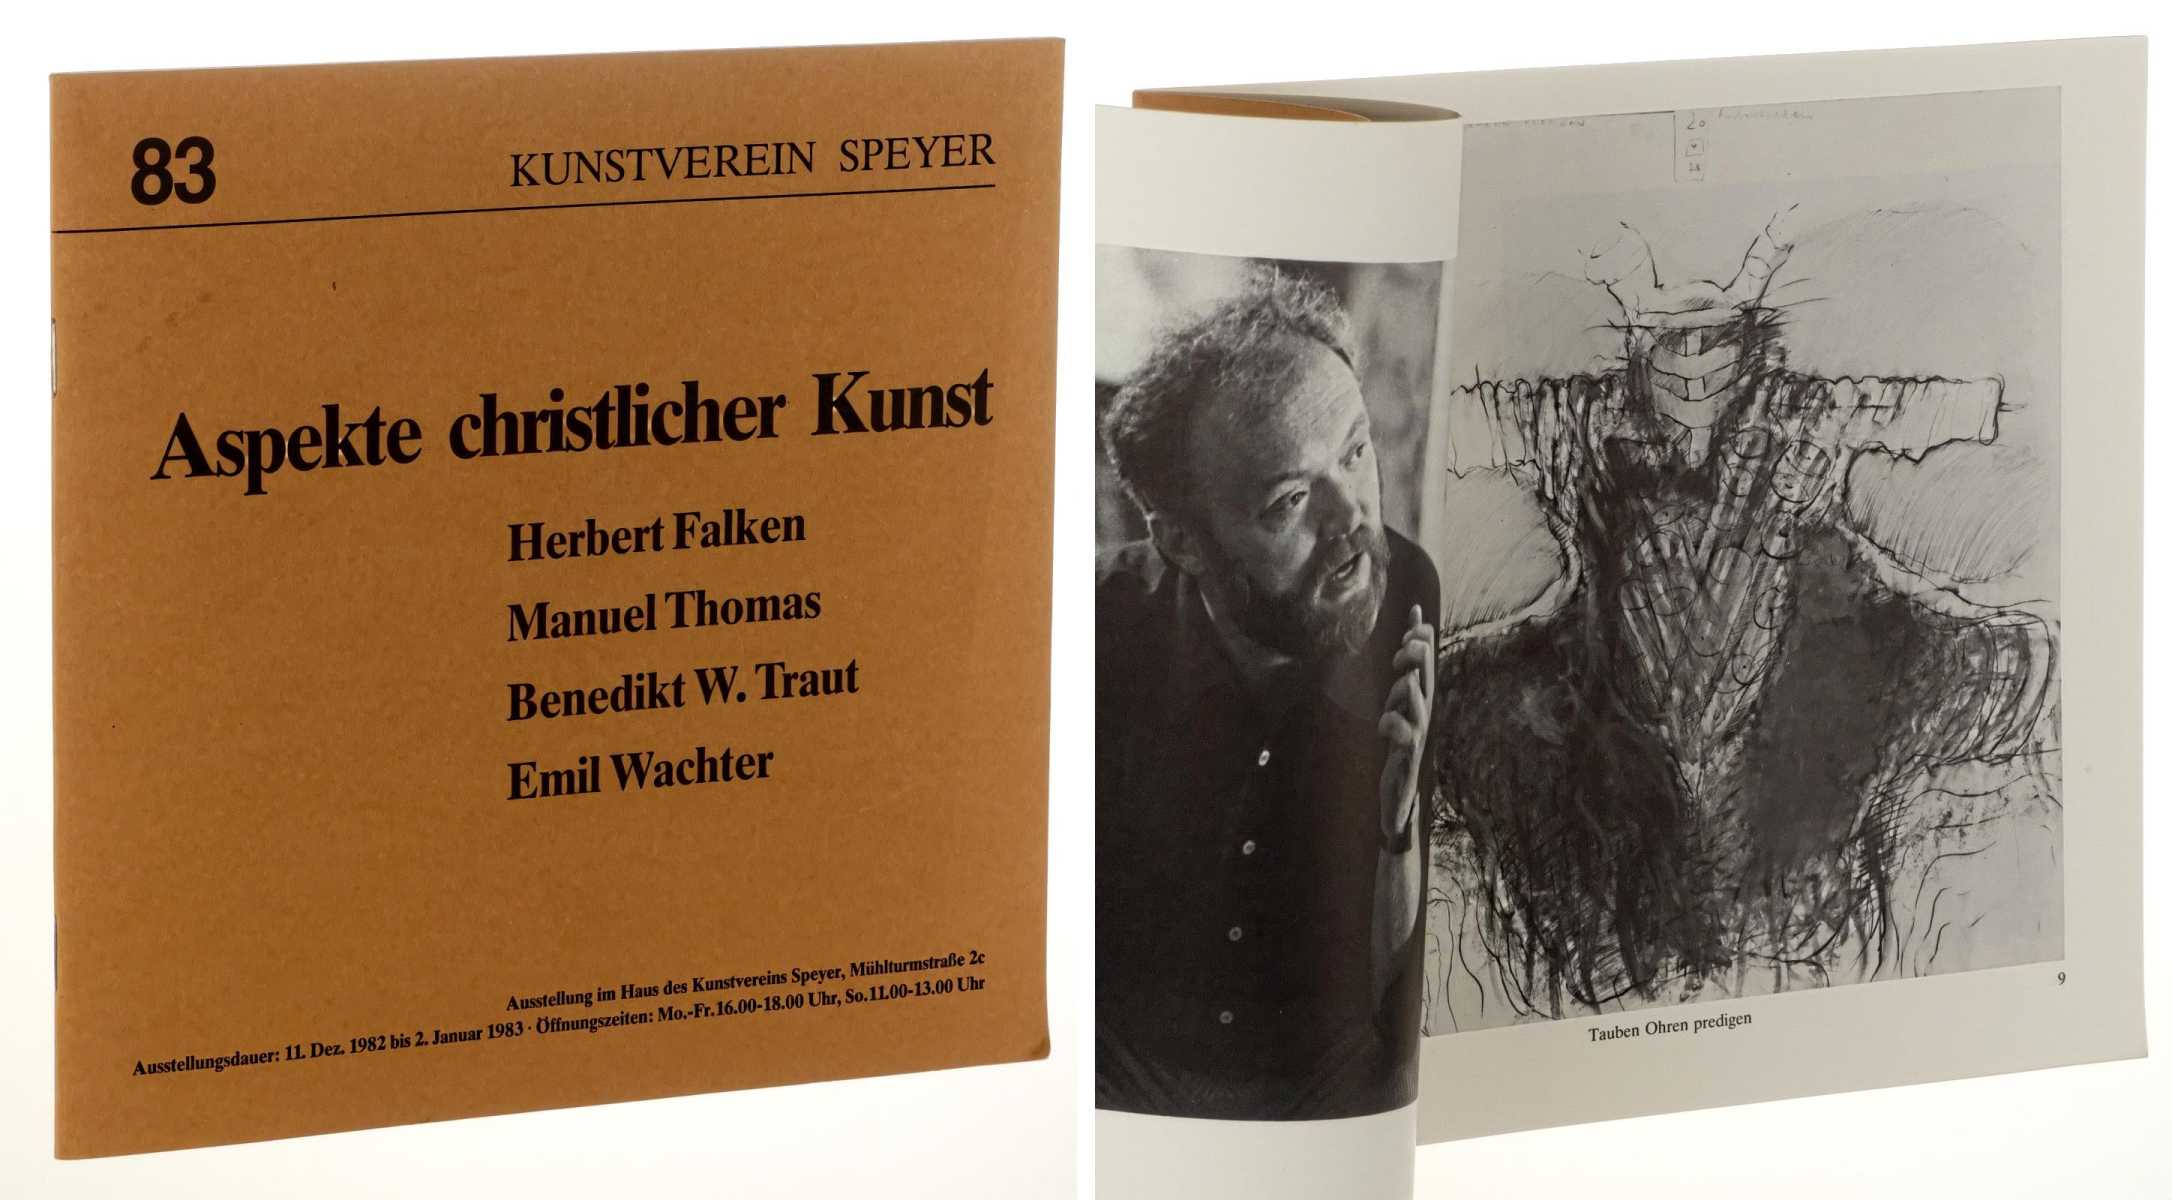   Aspekte christlicher Kunst. Herbert Falken, Manuel Thomas, Benedikt W. Traut, Emil Wachter. 